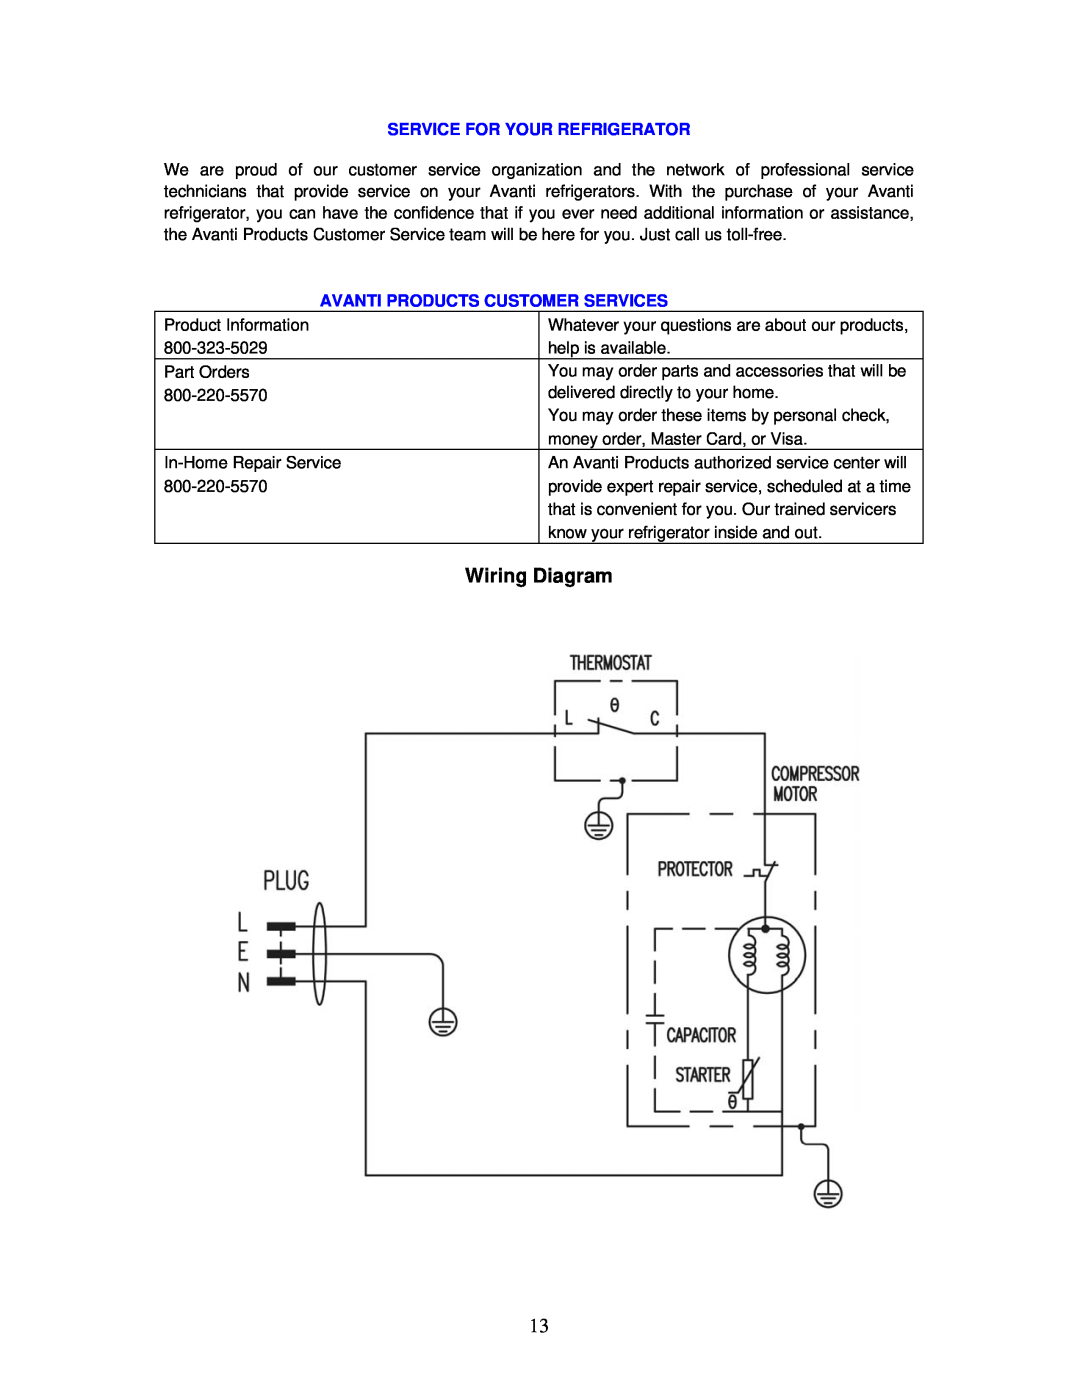 Avanti RM241B, BCA244B instruction manual Wiring Diagram, Service For Your Refrigerator, Avanti Products Customer Services 